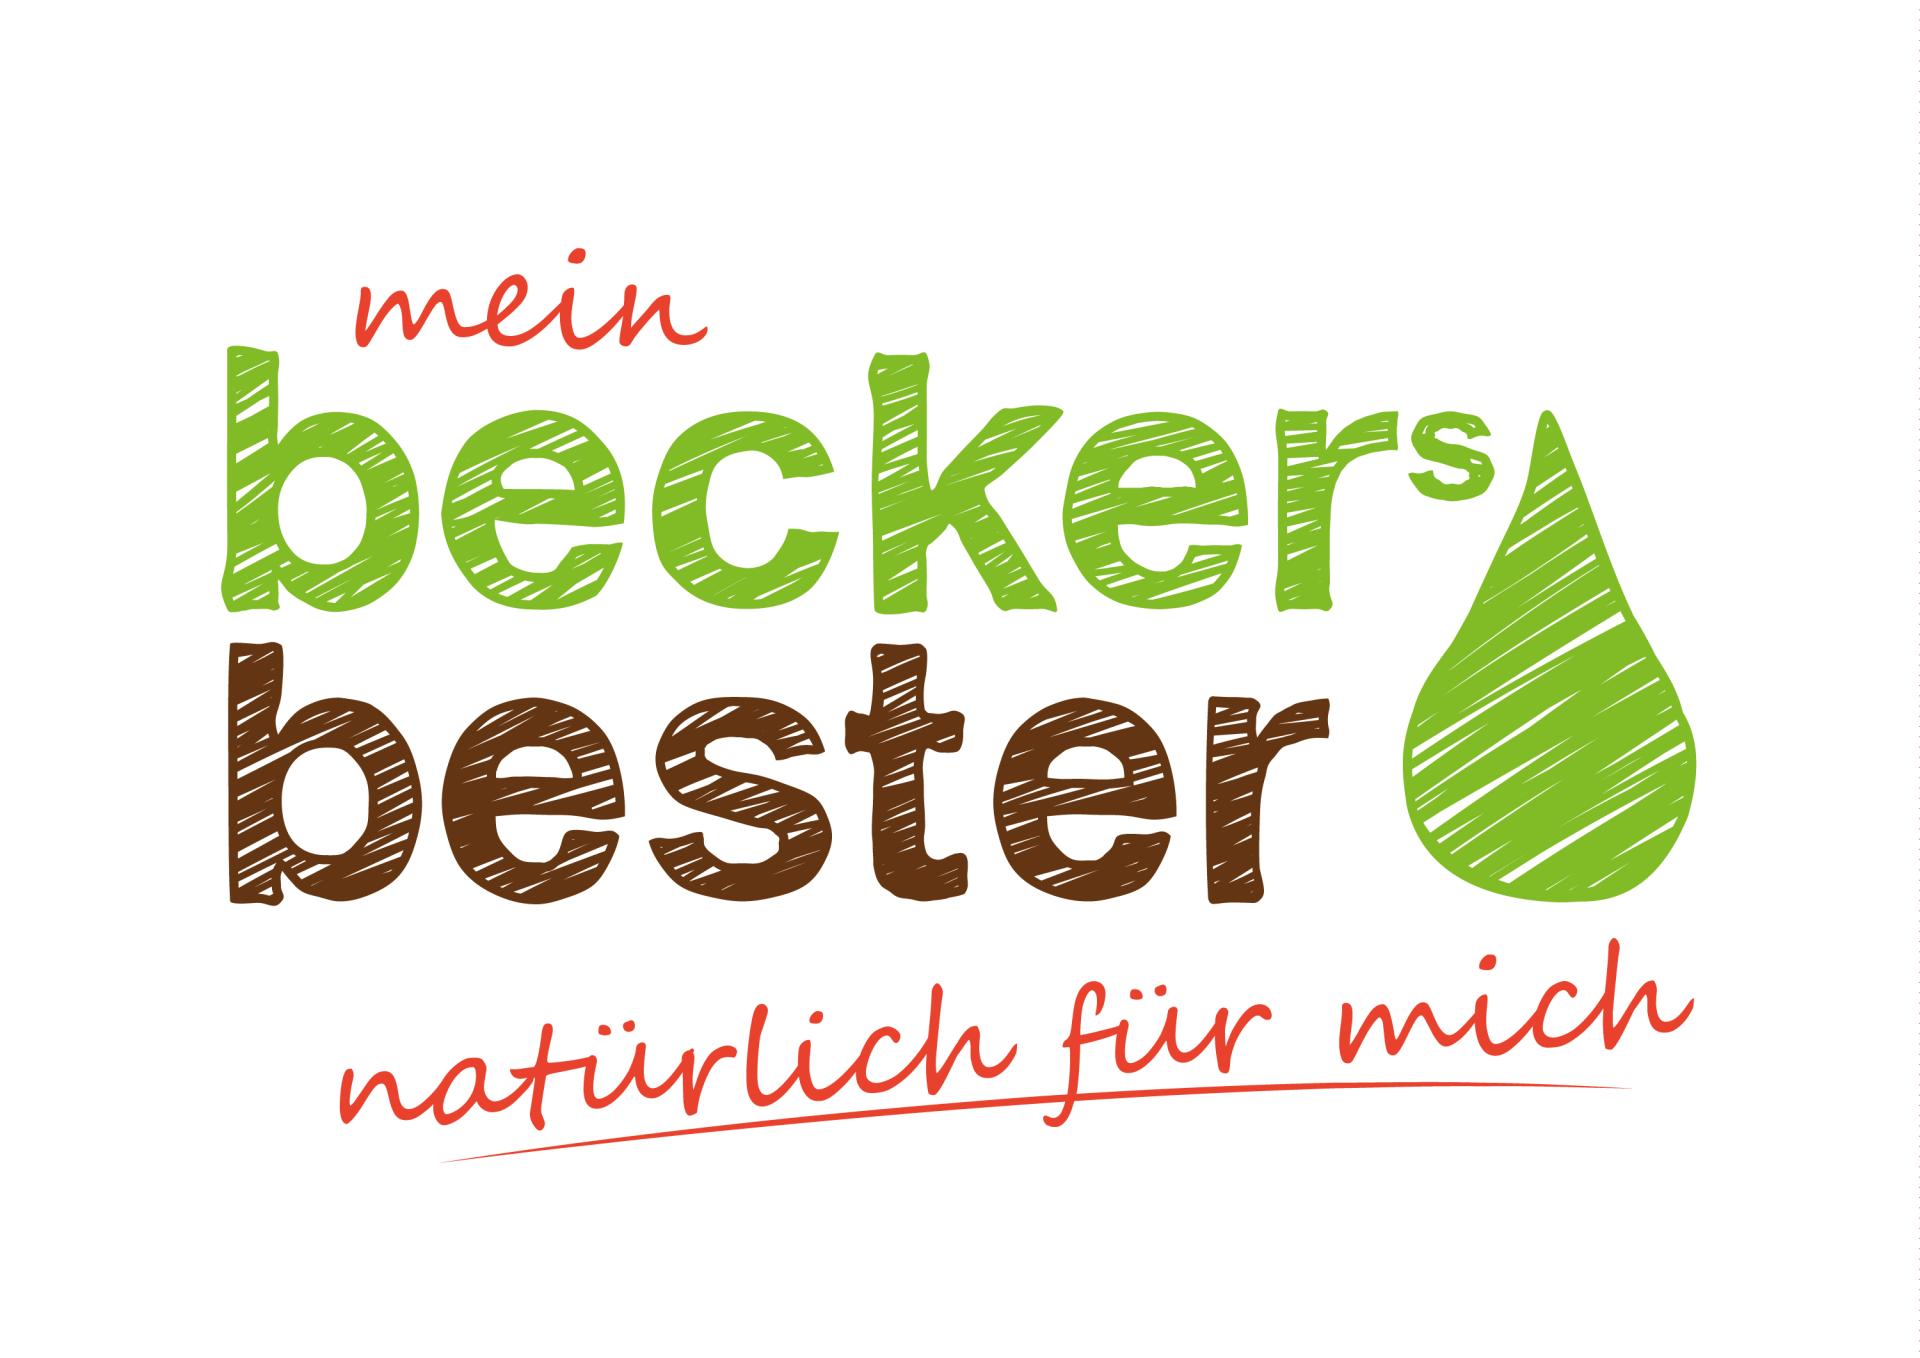 Beckers Bester